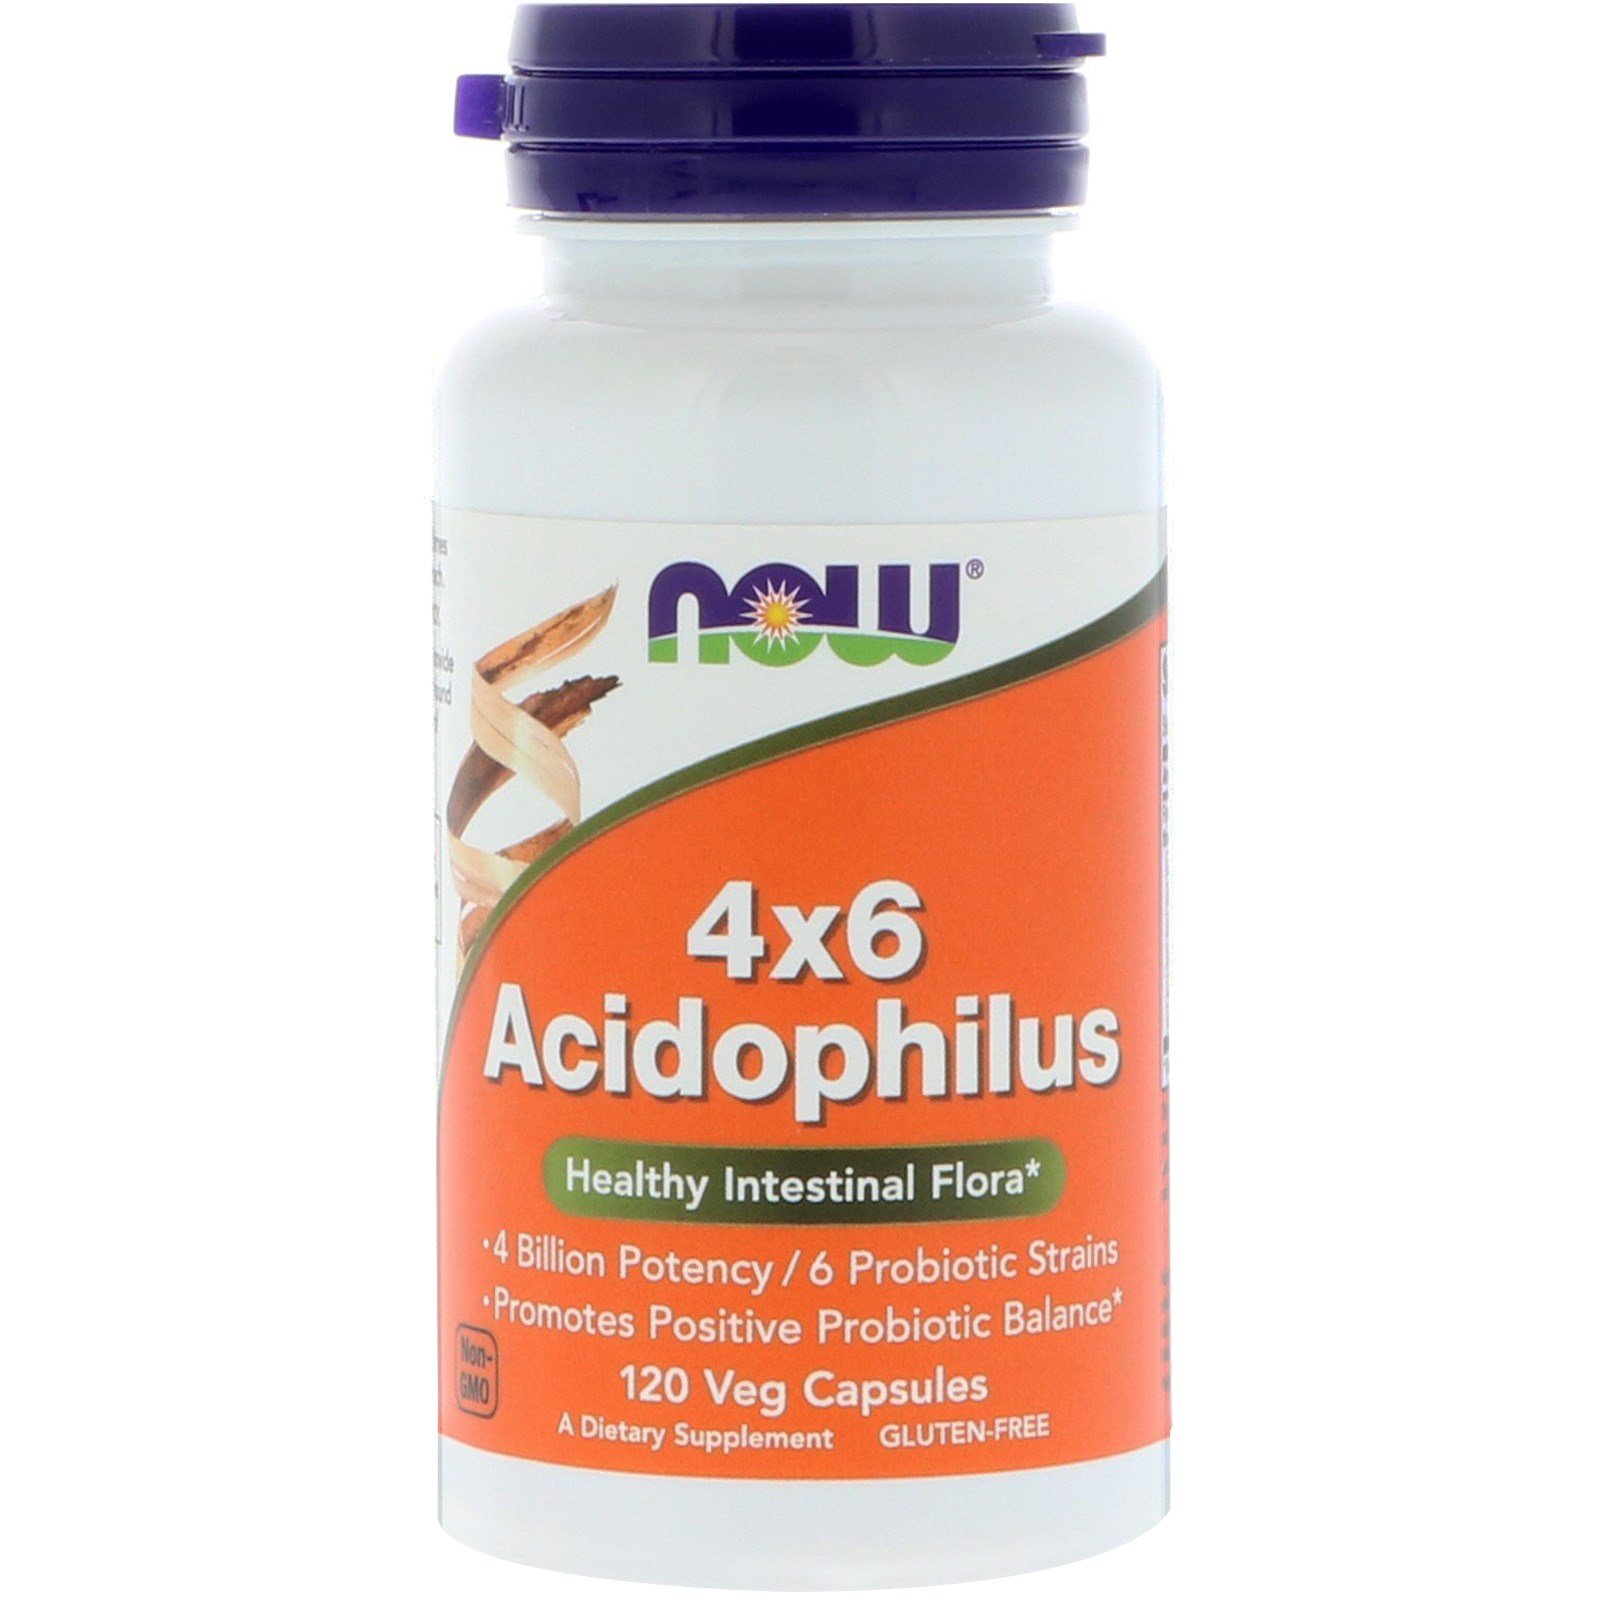 Acidophilus 4х6, Ацидофилус, Пробиотик, Бифидо и Лактобактерии - 120 капсул